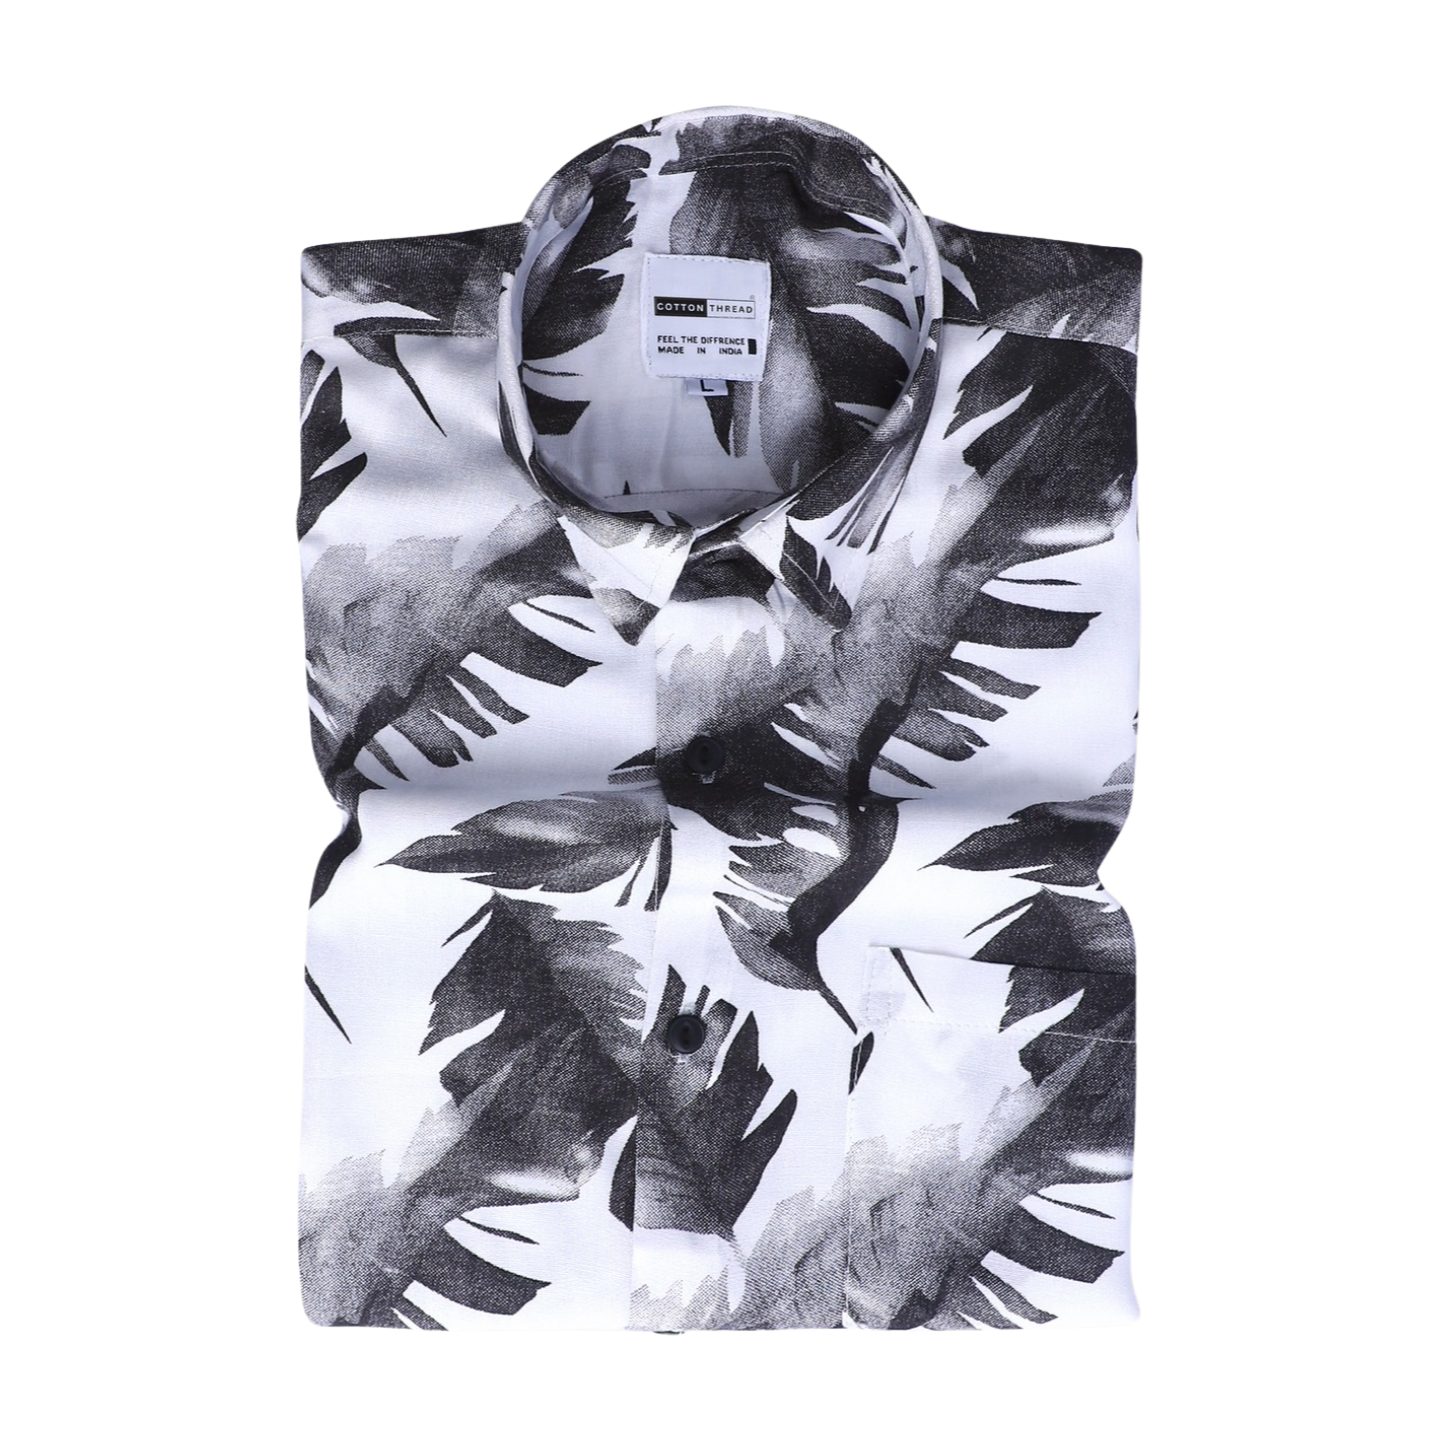 Men's Premium Cotton Full Sleeve Black Animal Printed Shirt By Cotton Thread (PRT-054)